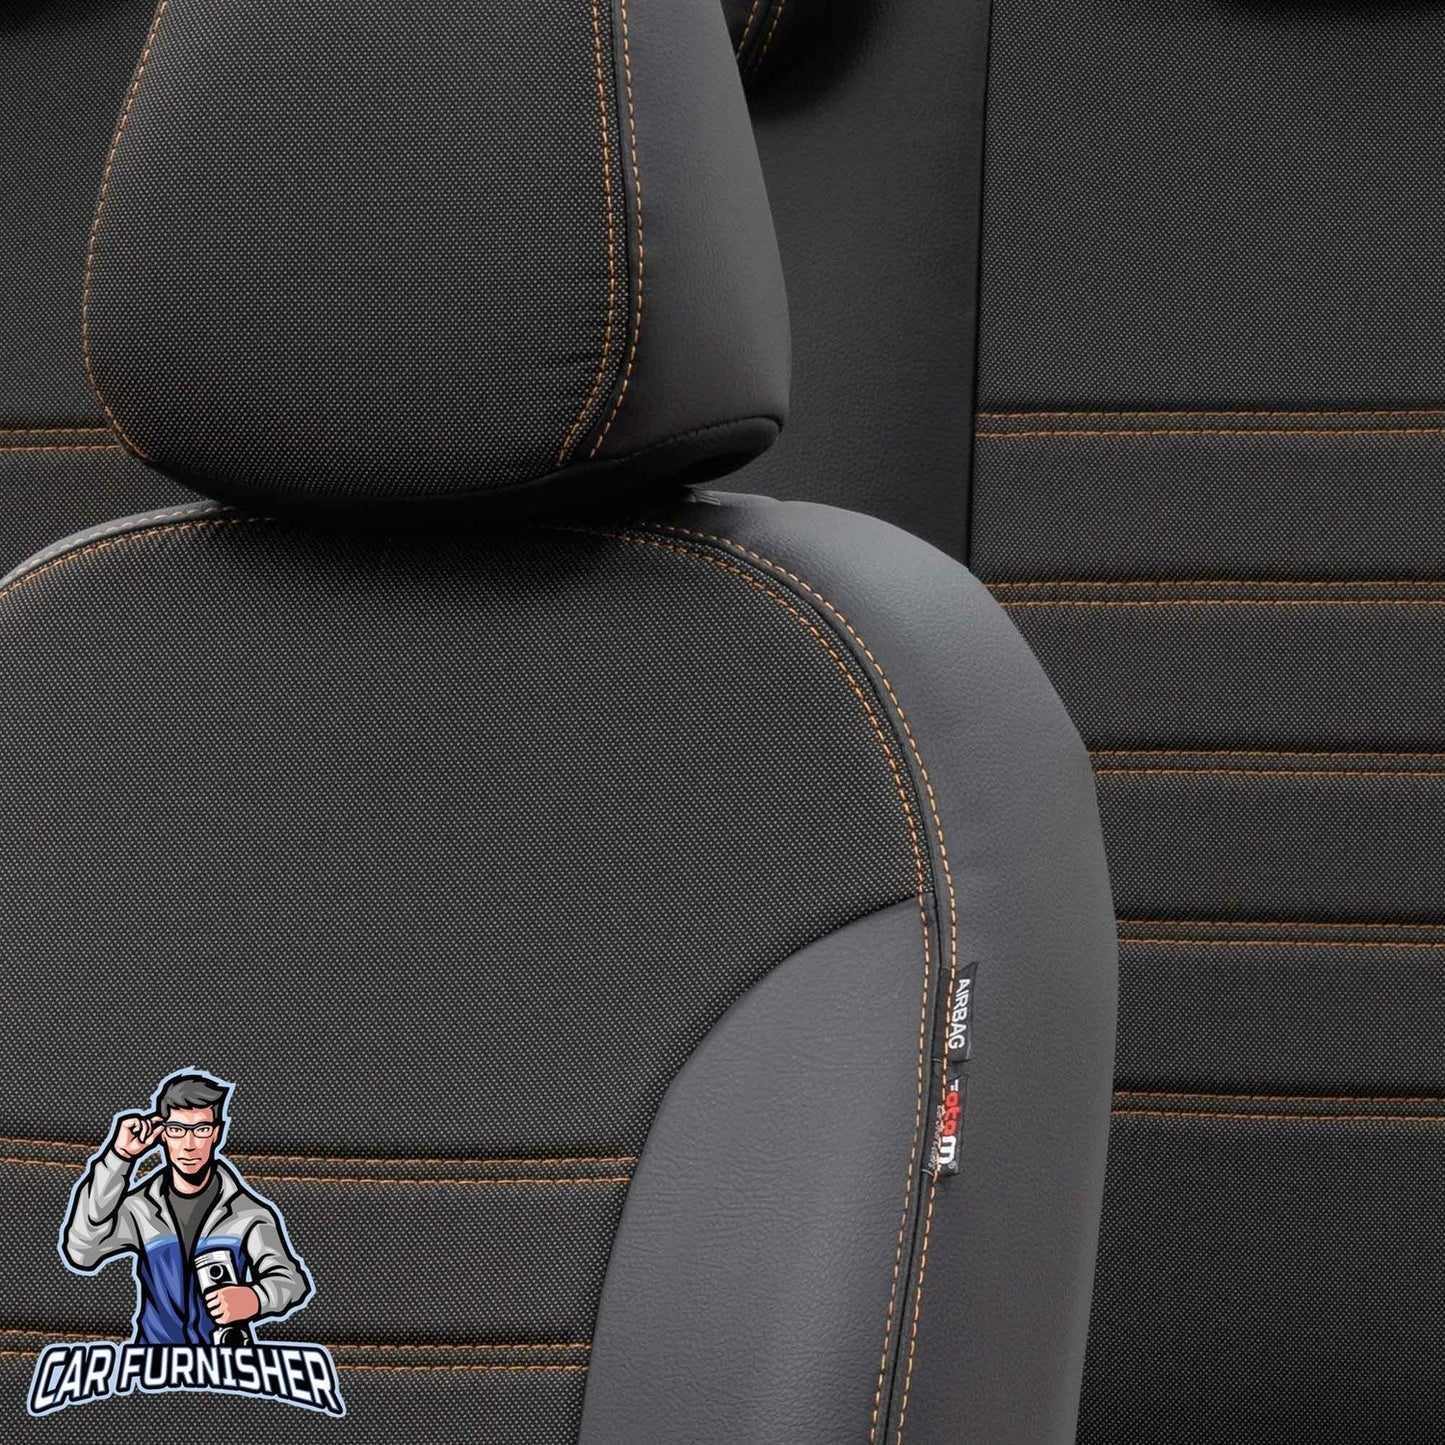 Alfa Romeo Giulietta Seat Cover Paris Leather & Jacquard Design Dark Beige Leather & Jacquard Fabric